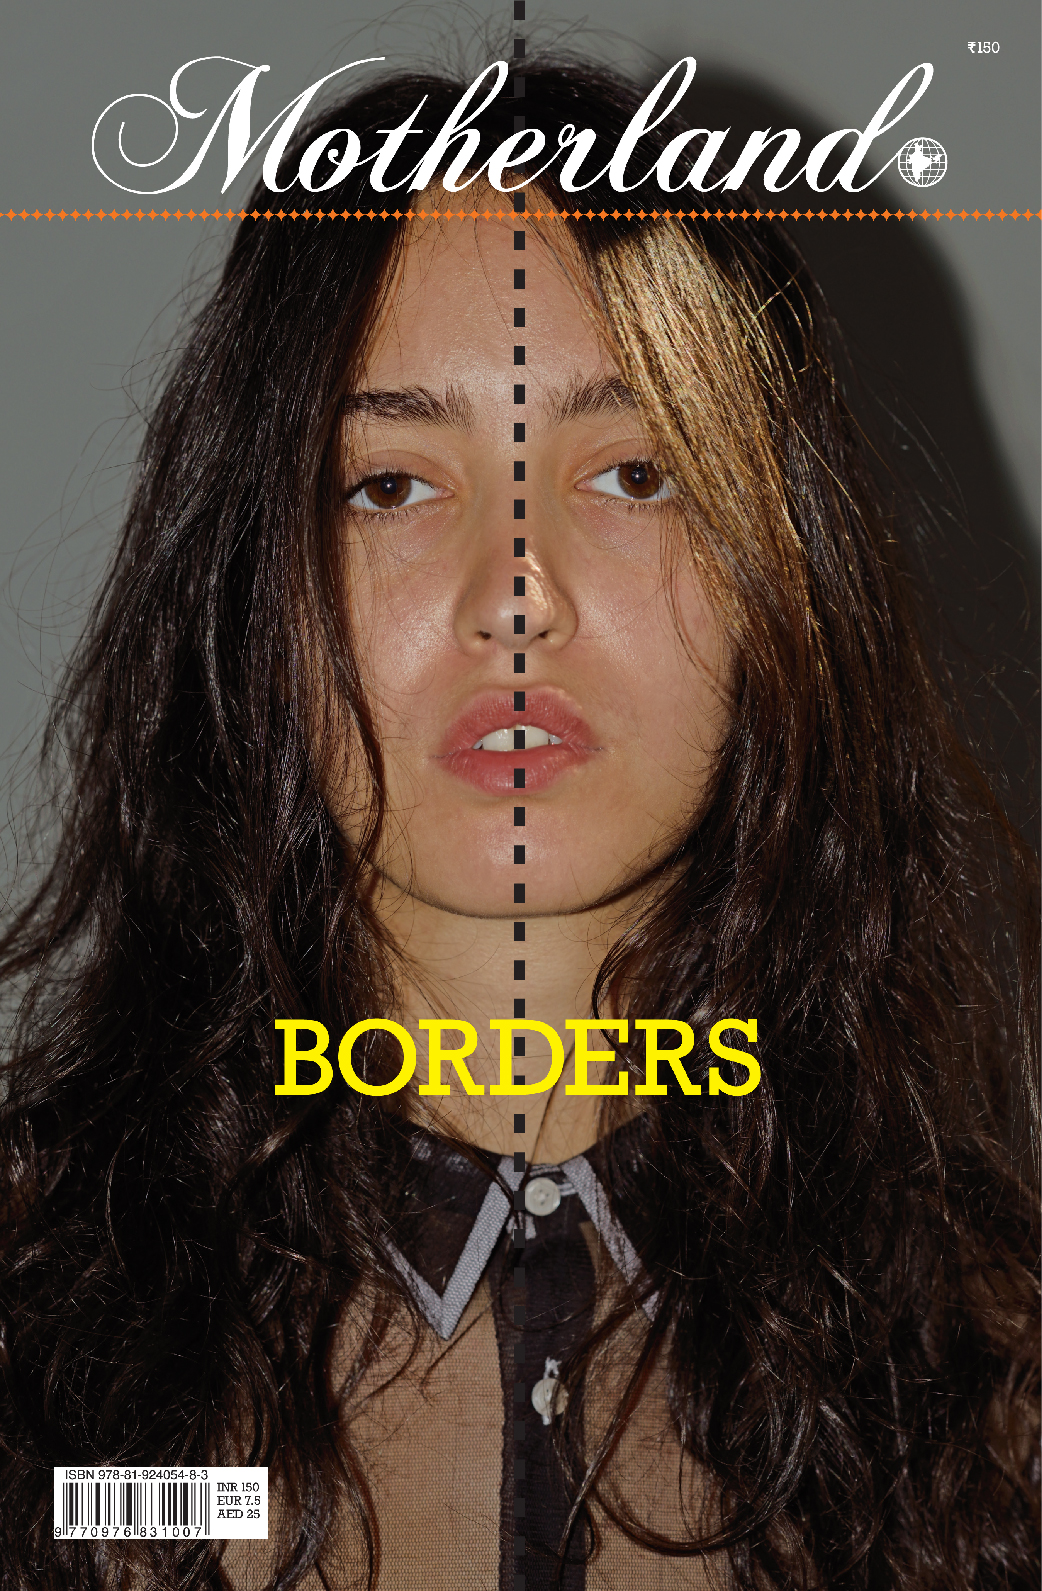 http://www.motherlandmagazine.com/borders